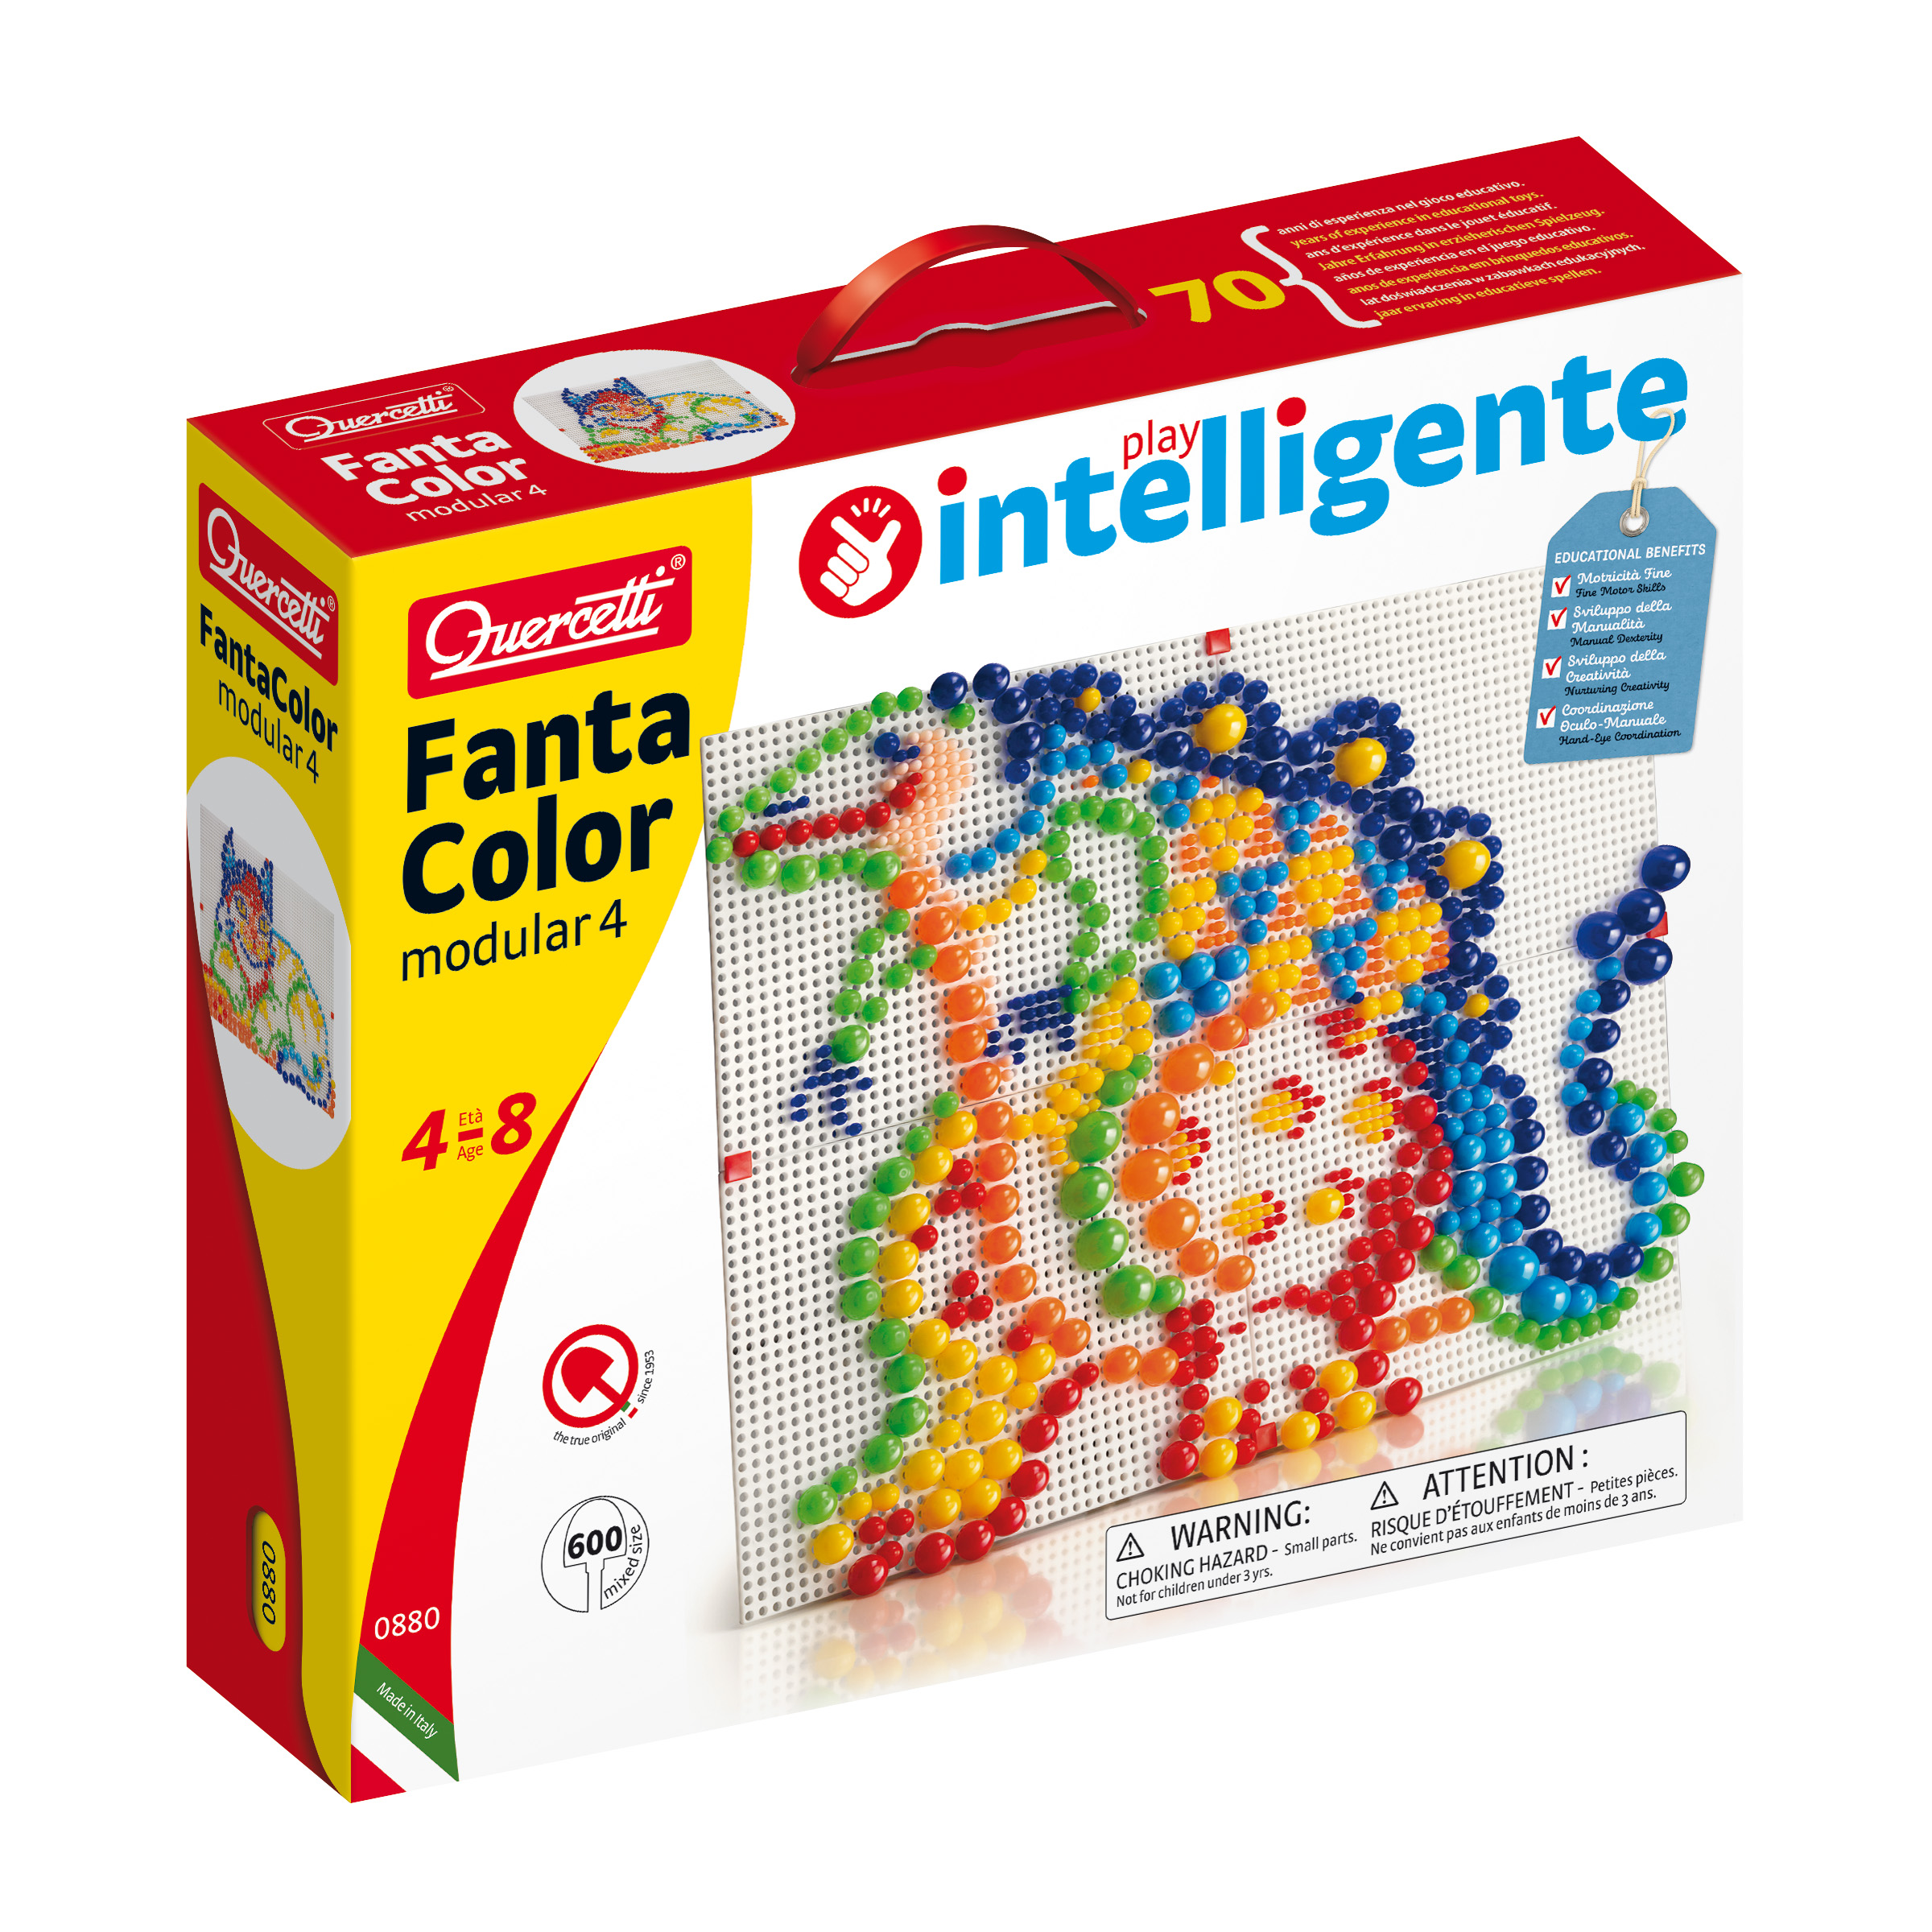 Fantacolor modular 4 - 